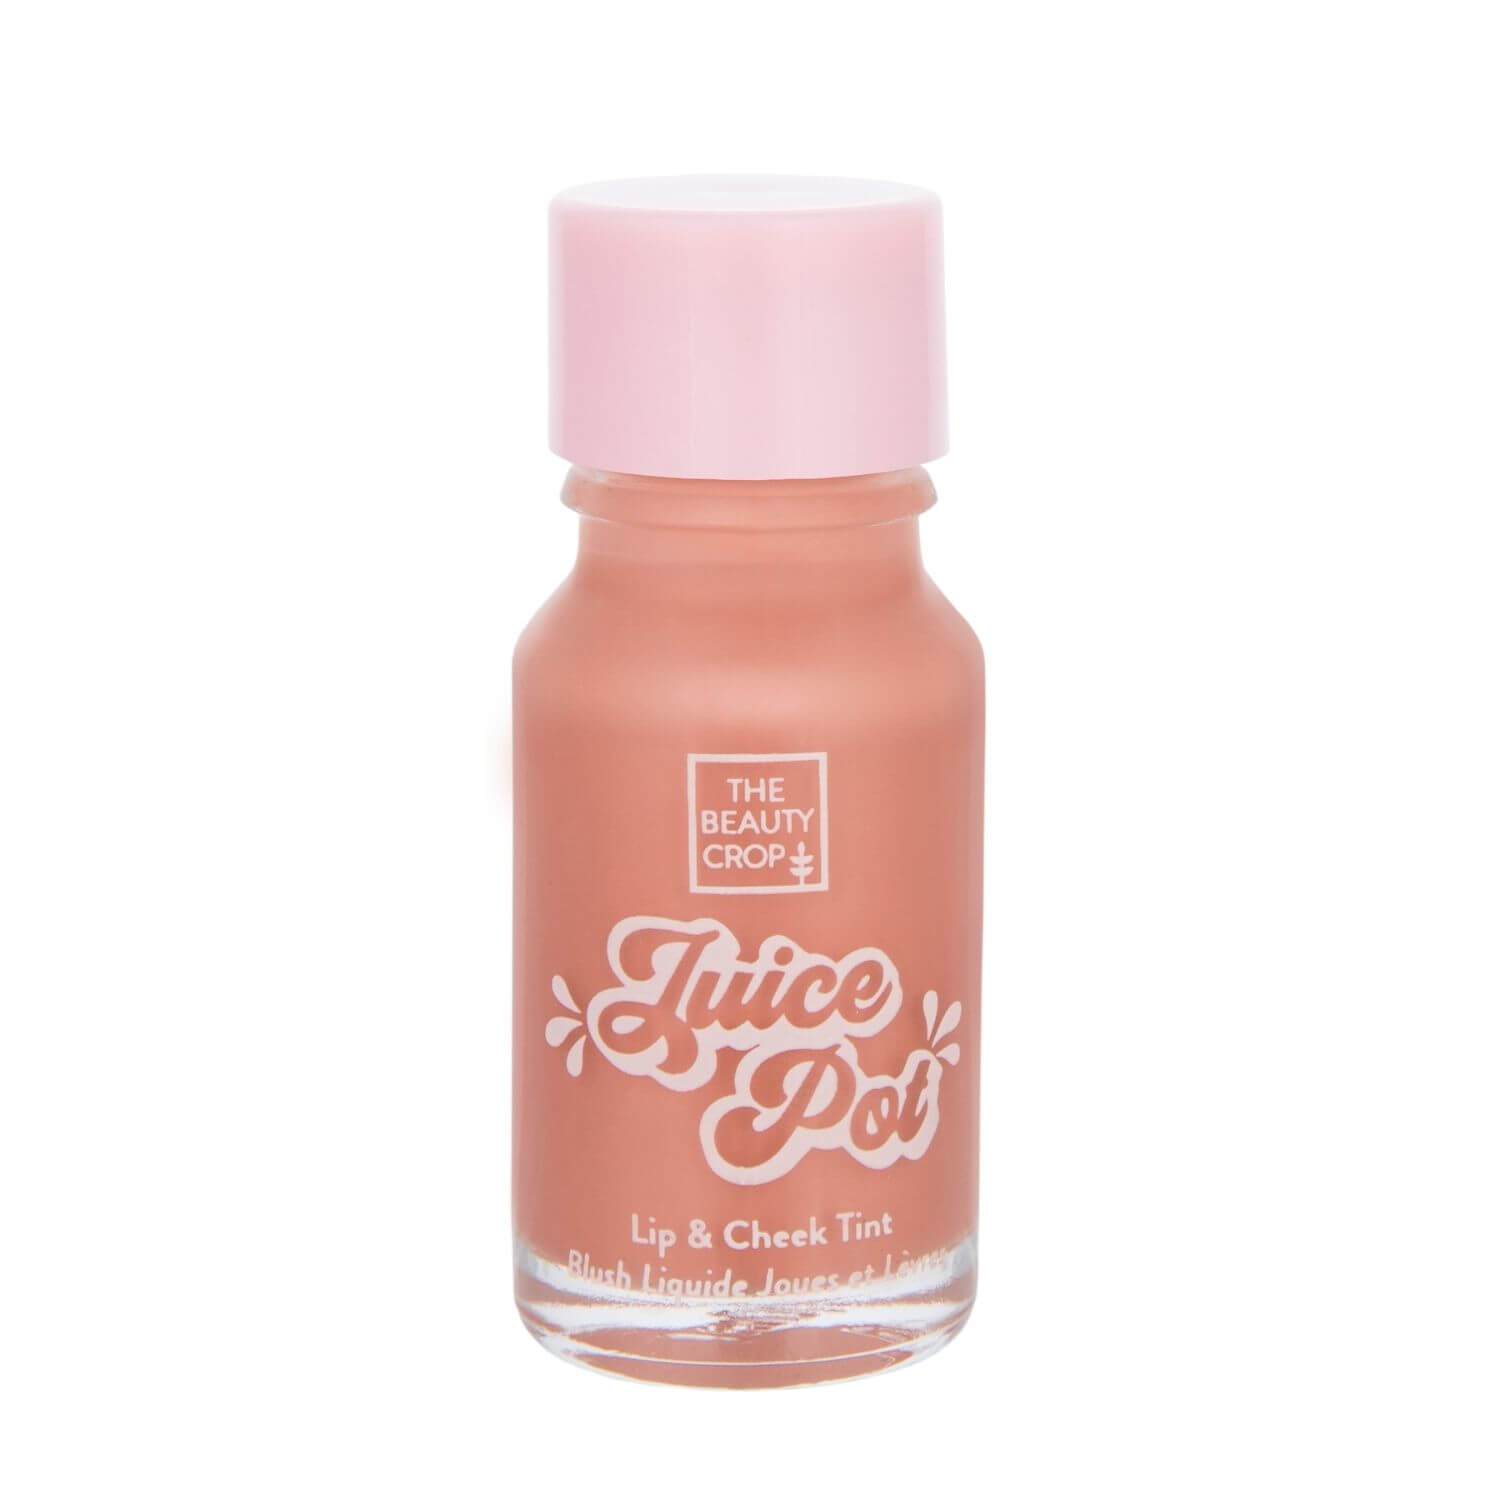 The Beauty Crop - Juice Pot Lip & Cheek Tint Peach